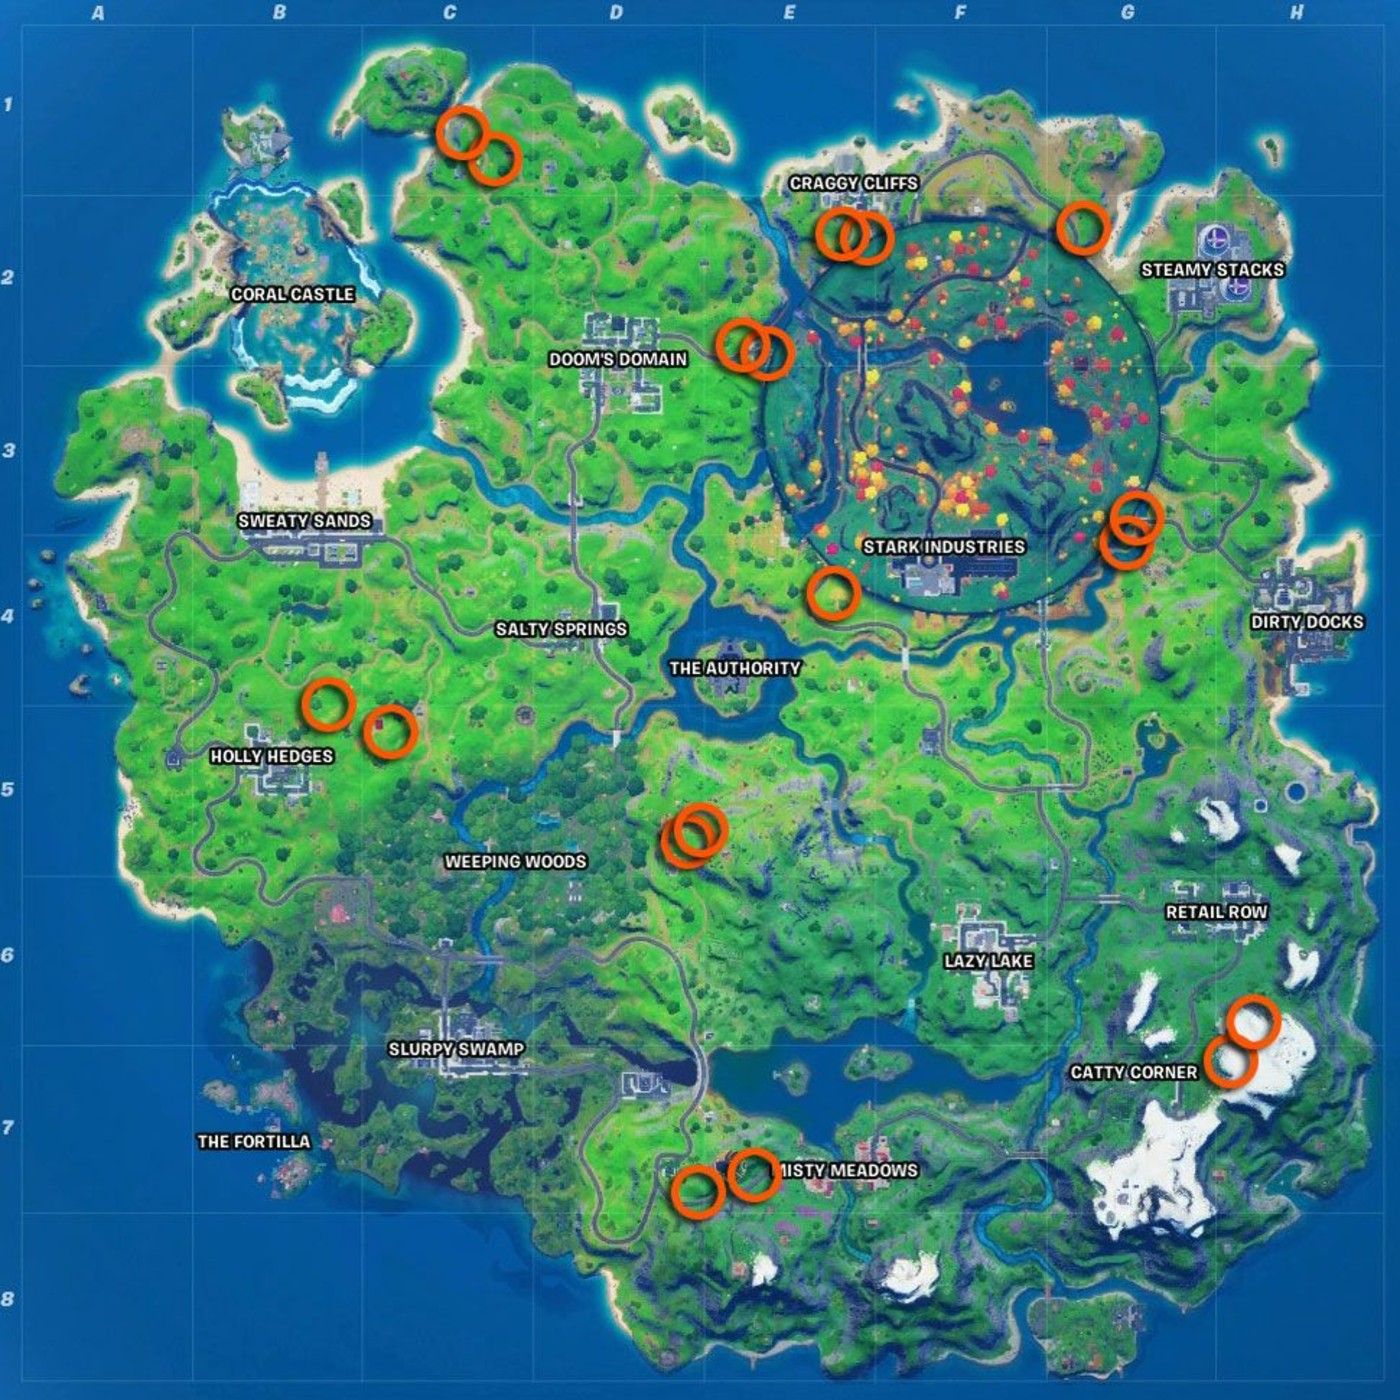 Rift Portal Locations on the Fortnite Season 4 Map